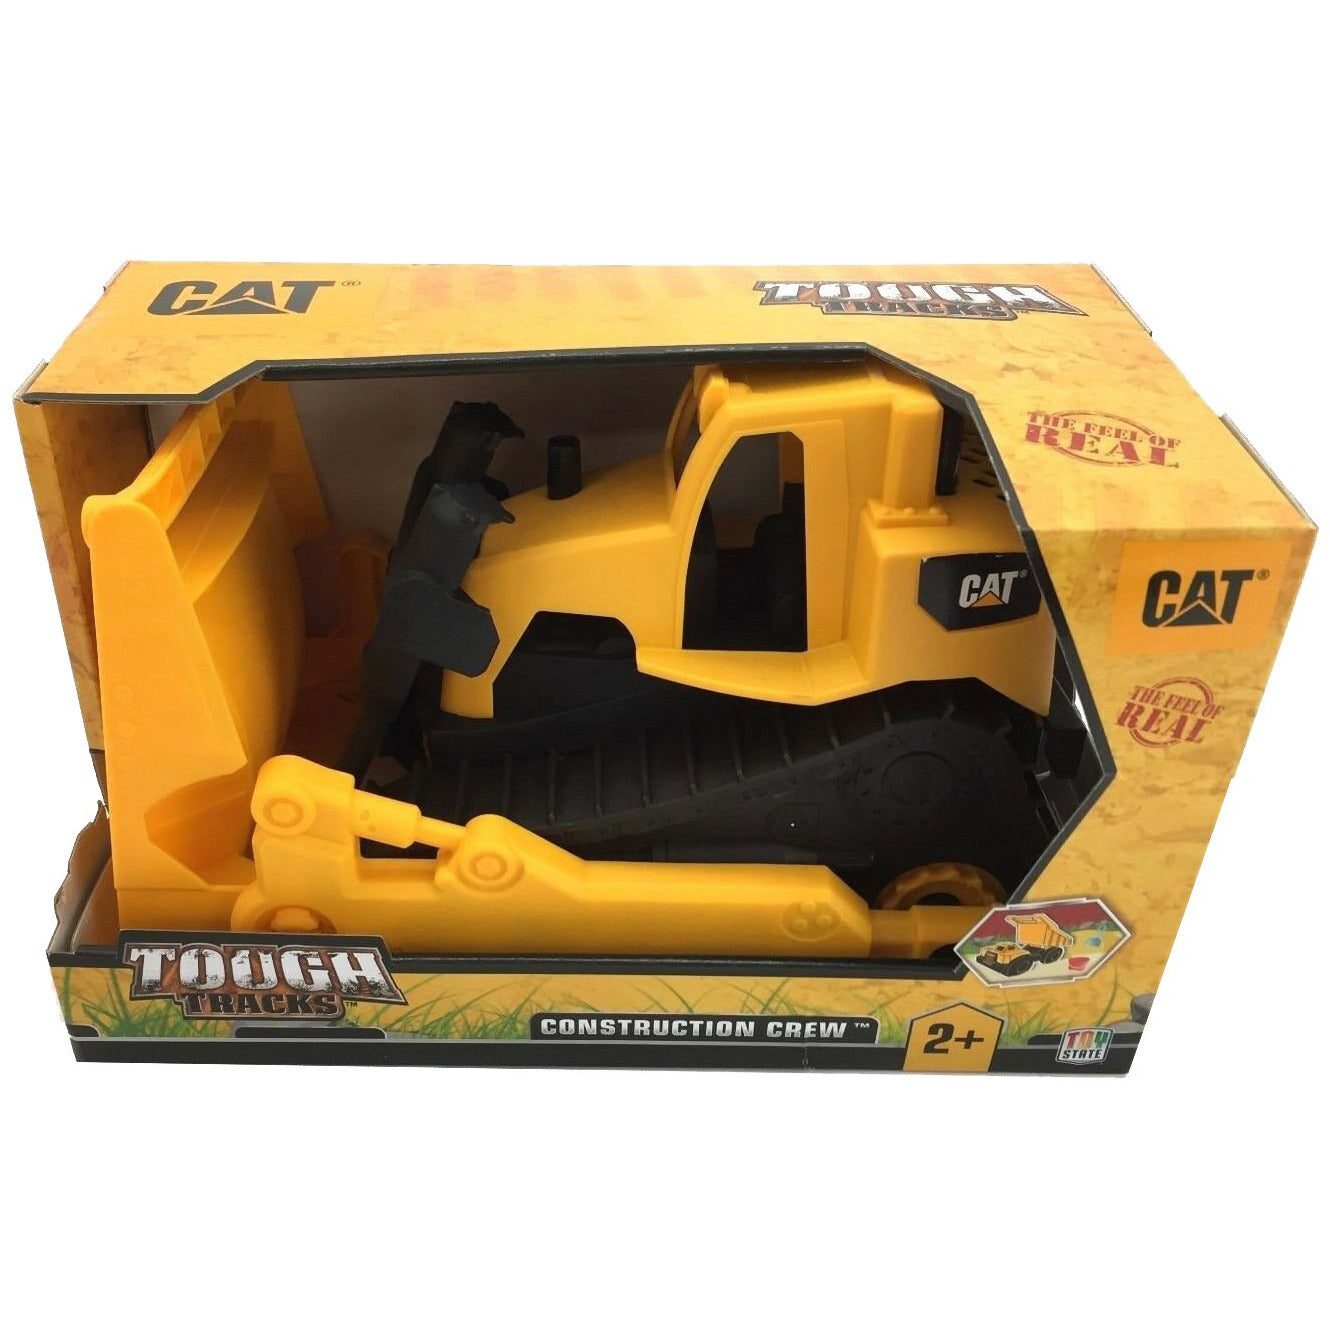 CAT Tough Tracks Bulldozer toddler toy